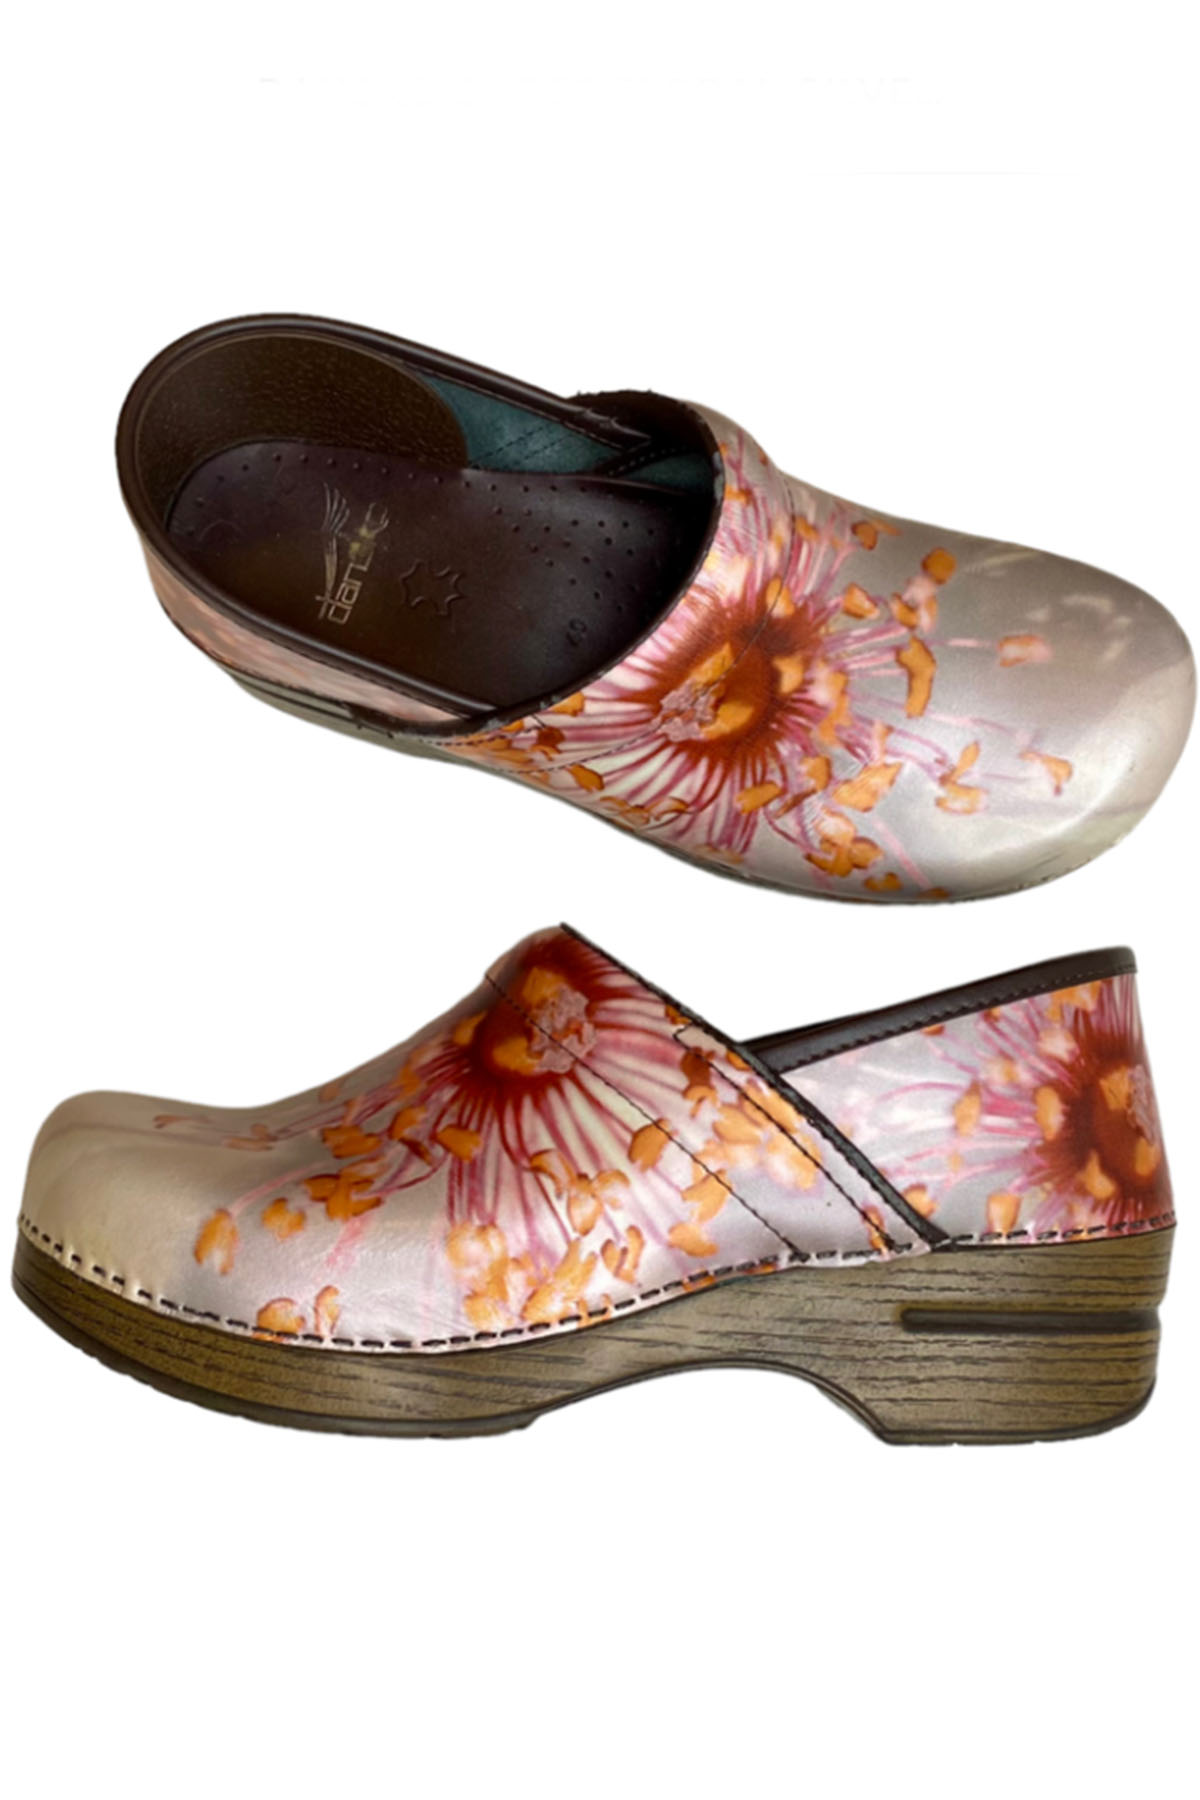 a pair of floral dansko shoes.